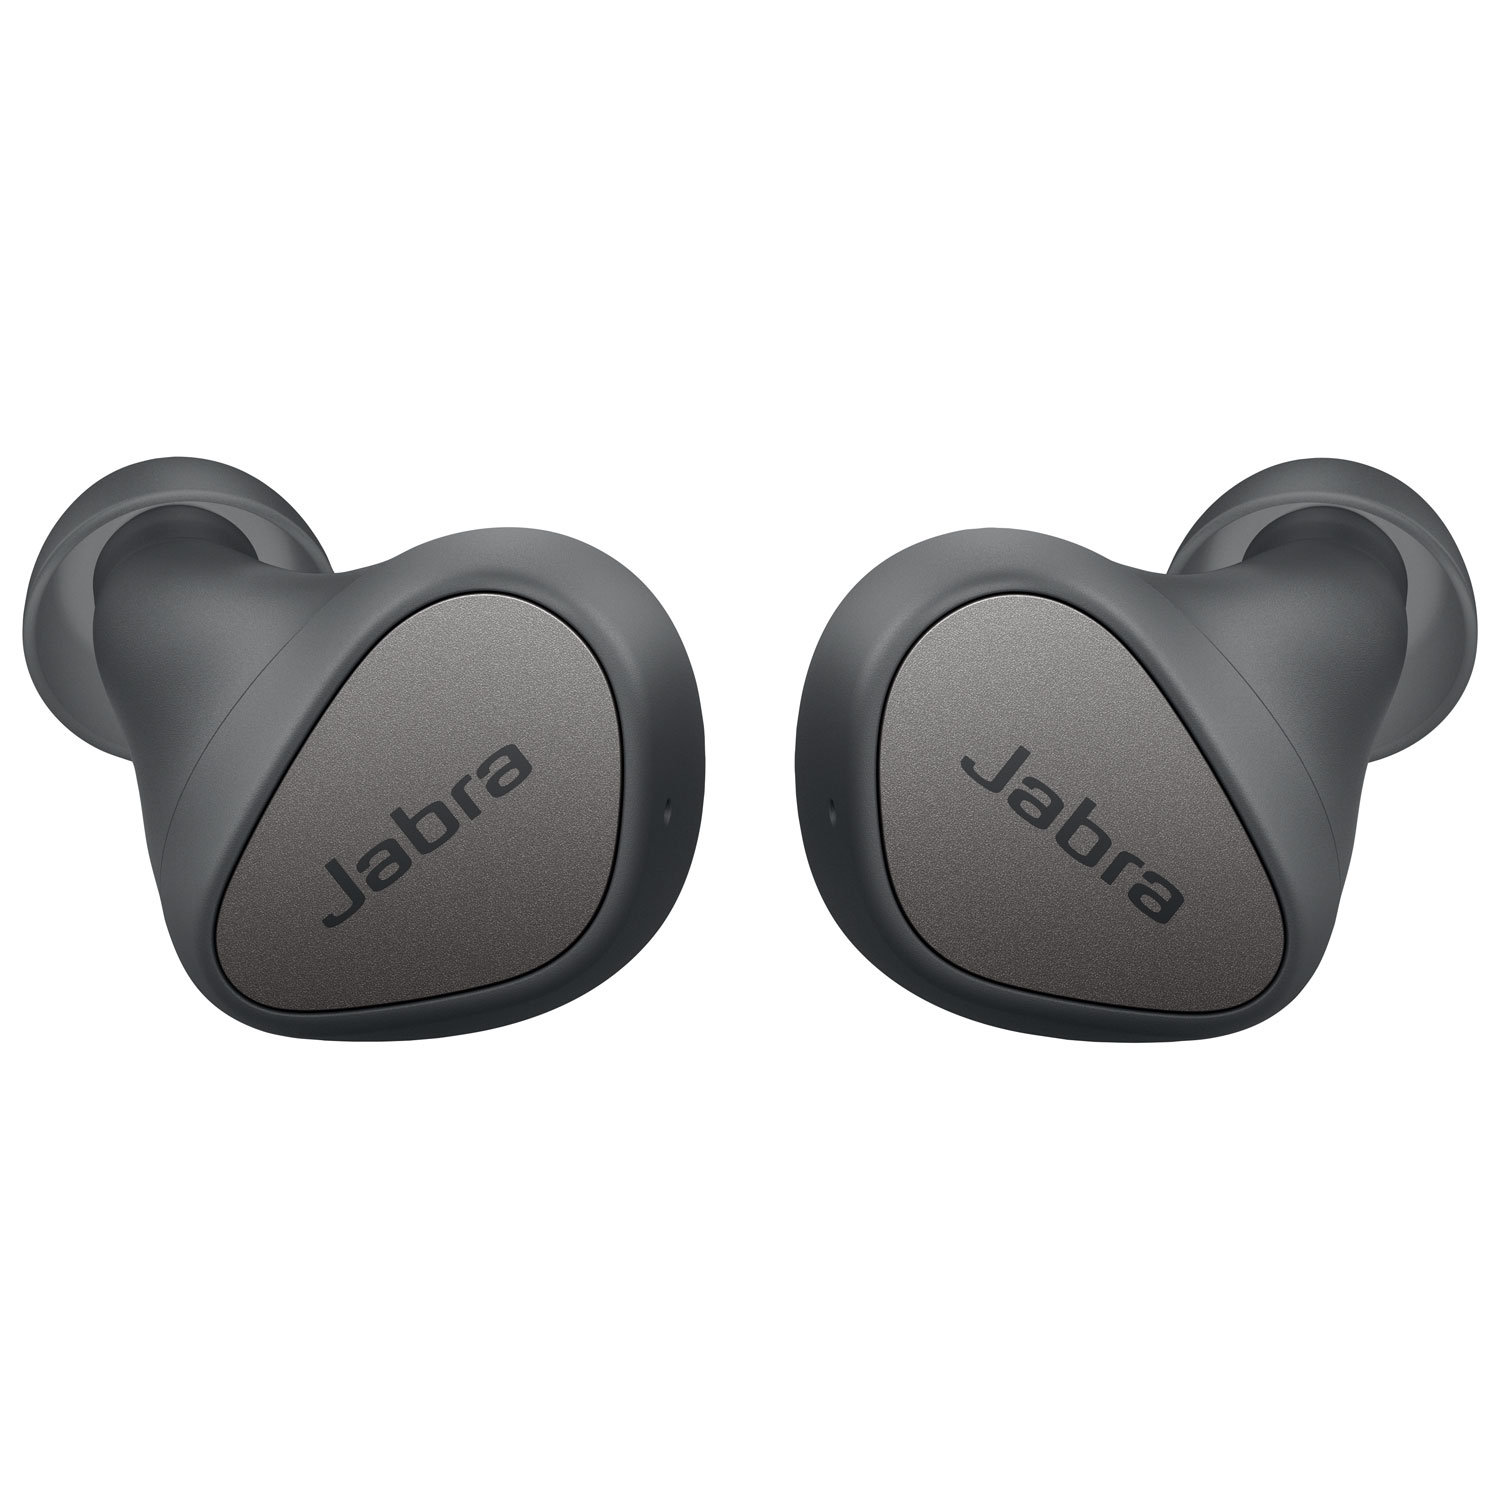 Jabra Elite 3 In-Ear Sound Isolating True Wireless Earbuds - Grey